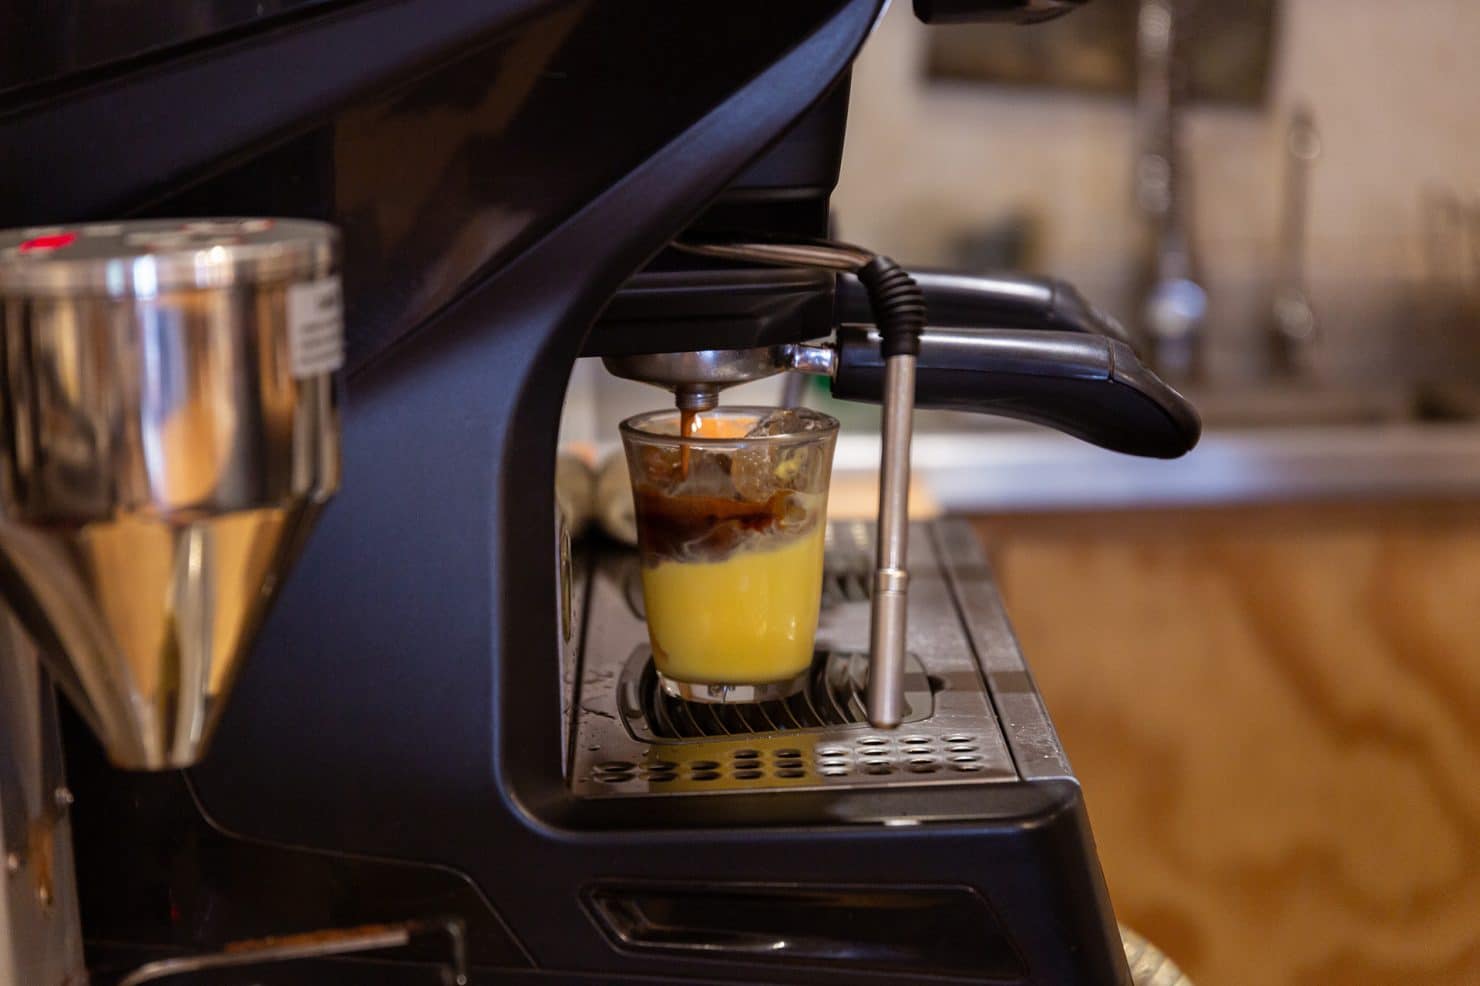 Juamilton By Terrible Juan Glass Of Rompope On The Espresso Machine Denisse Valentin